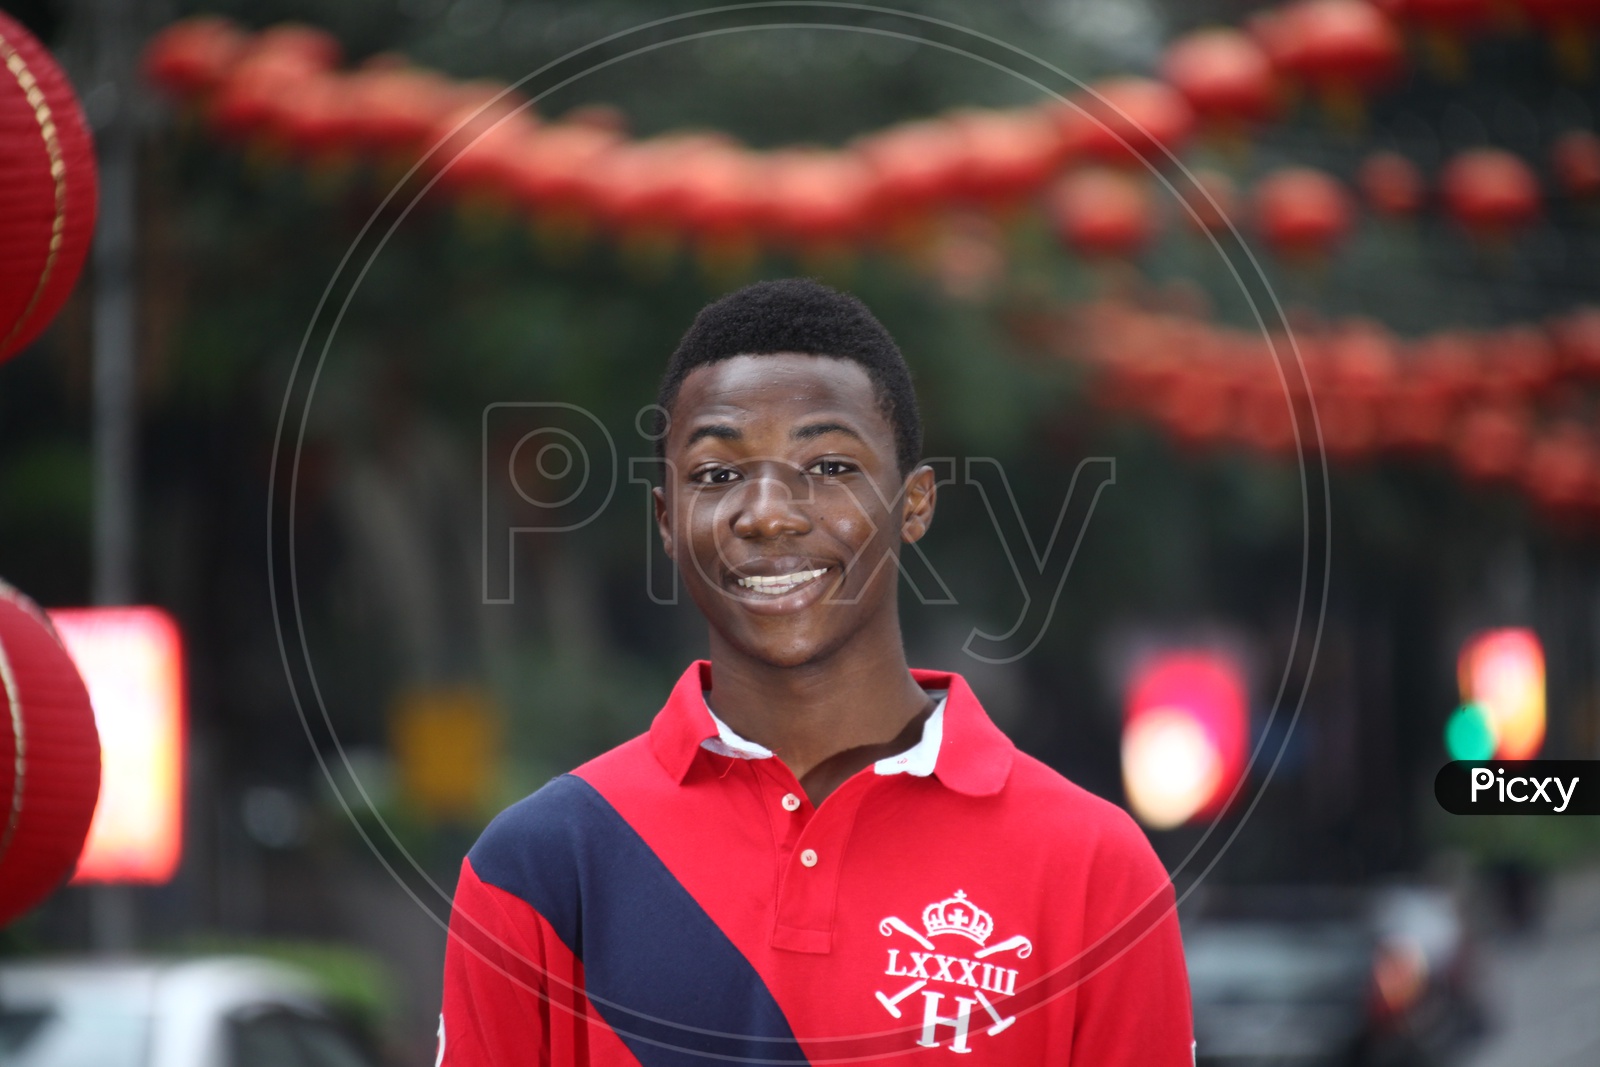 An African man smiling